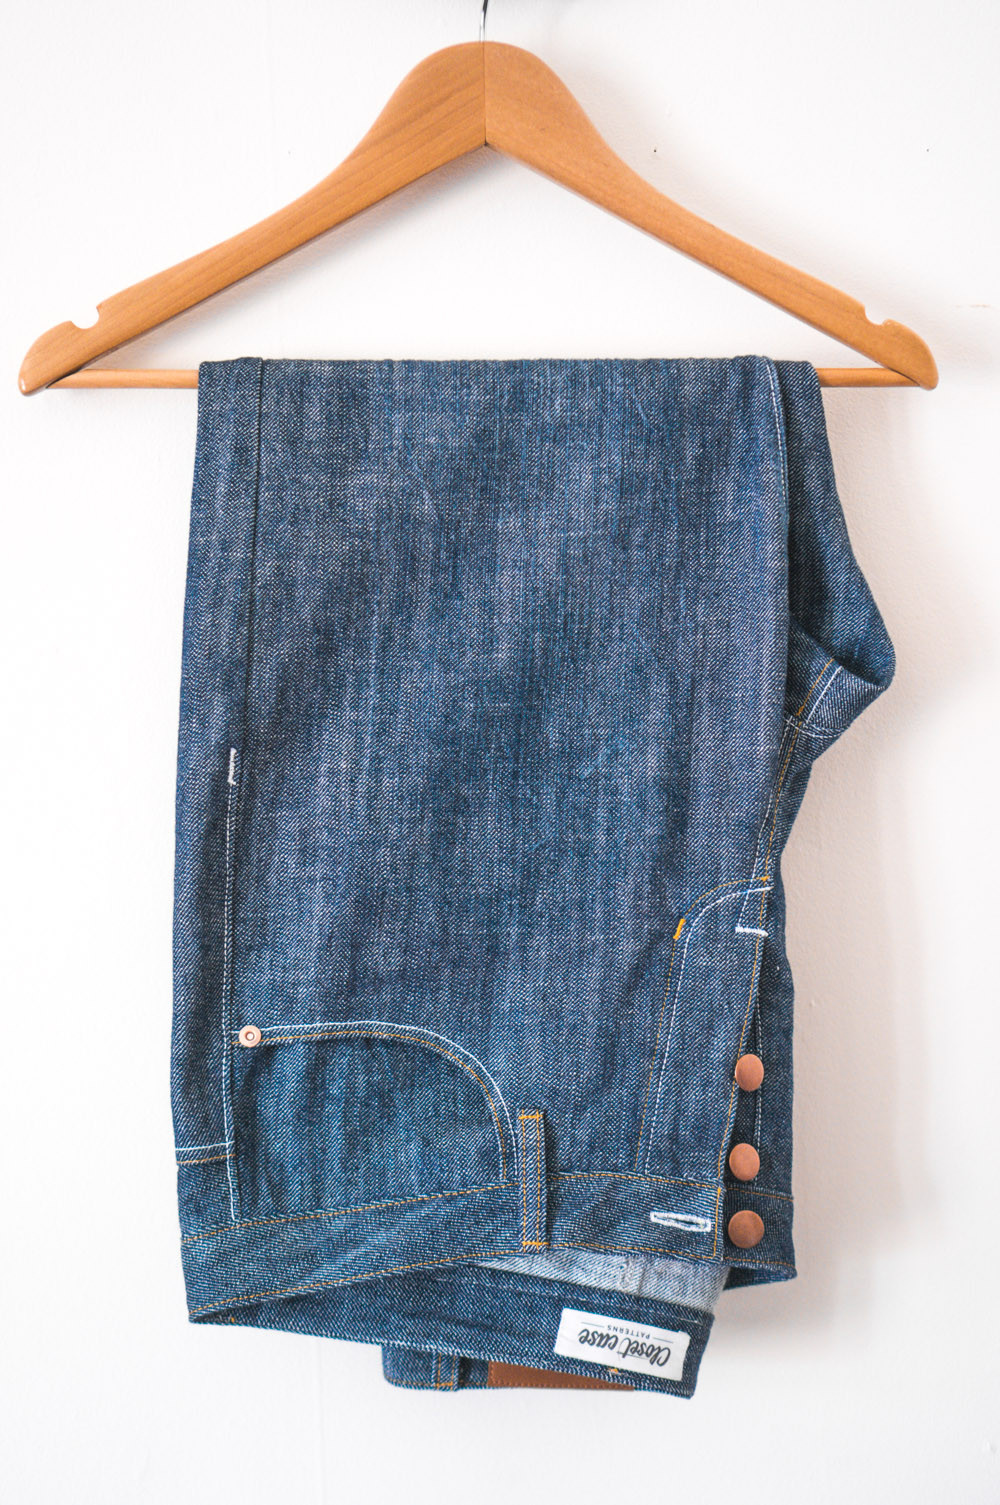 Jeans folded over a hanger